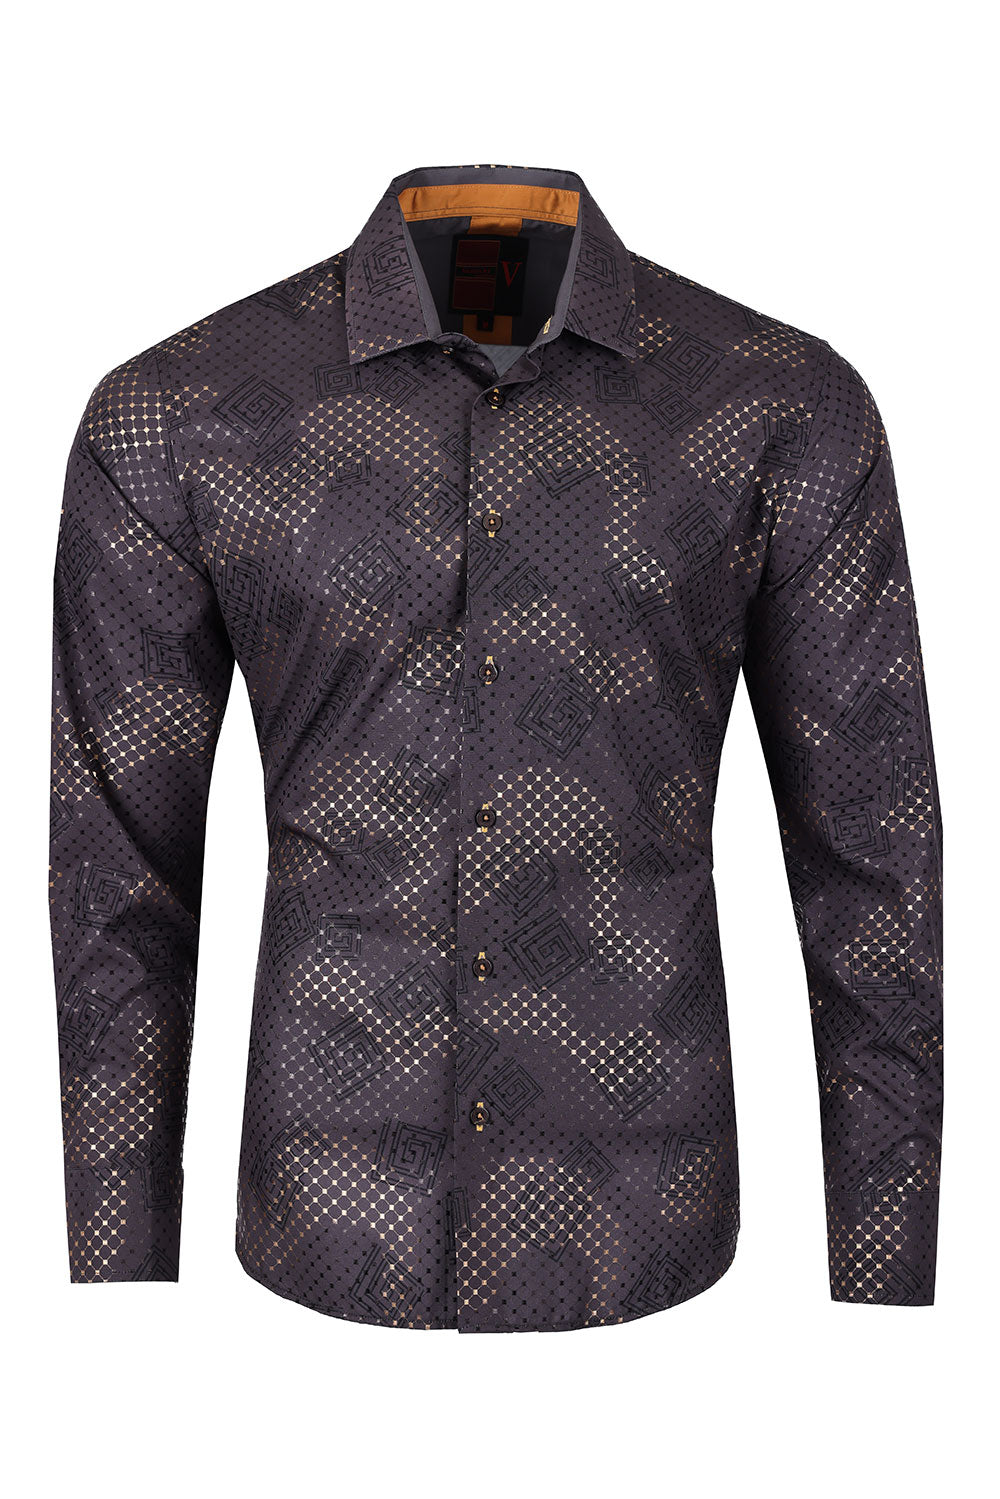 Vassari Mens Diamond Checkered Print Design Button Down Luxury Shirt  2VS156 Brown